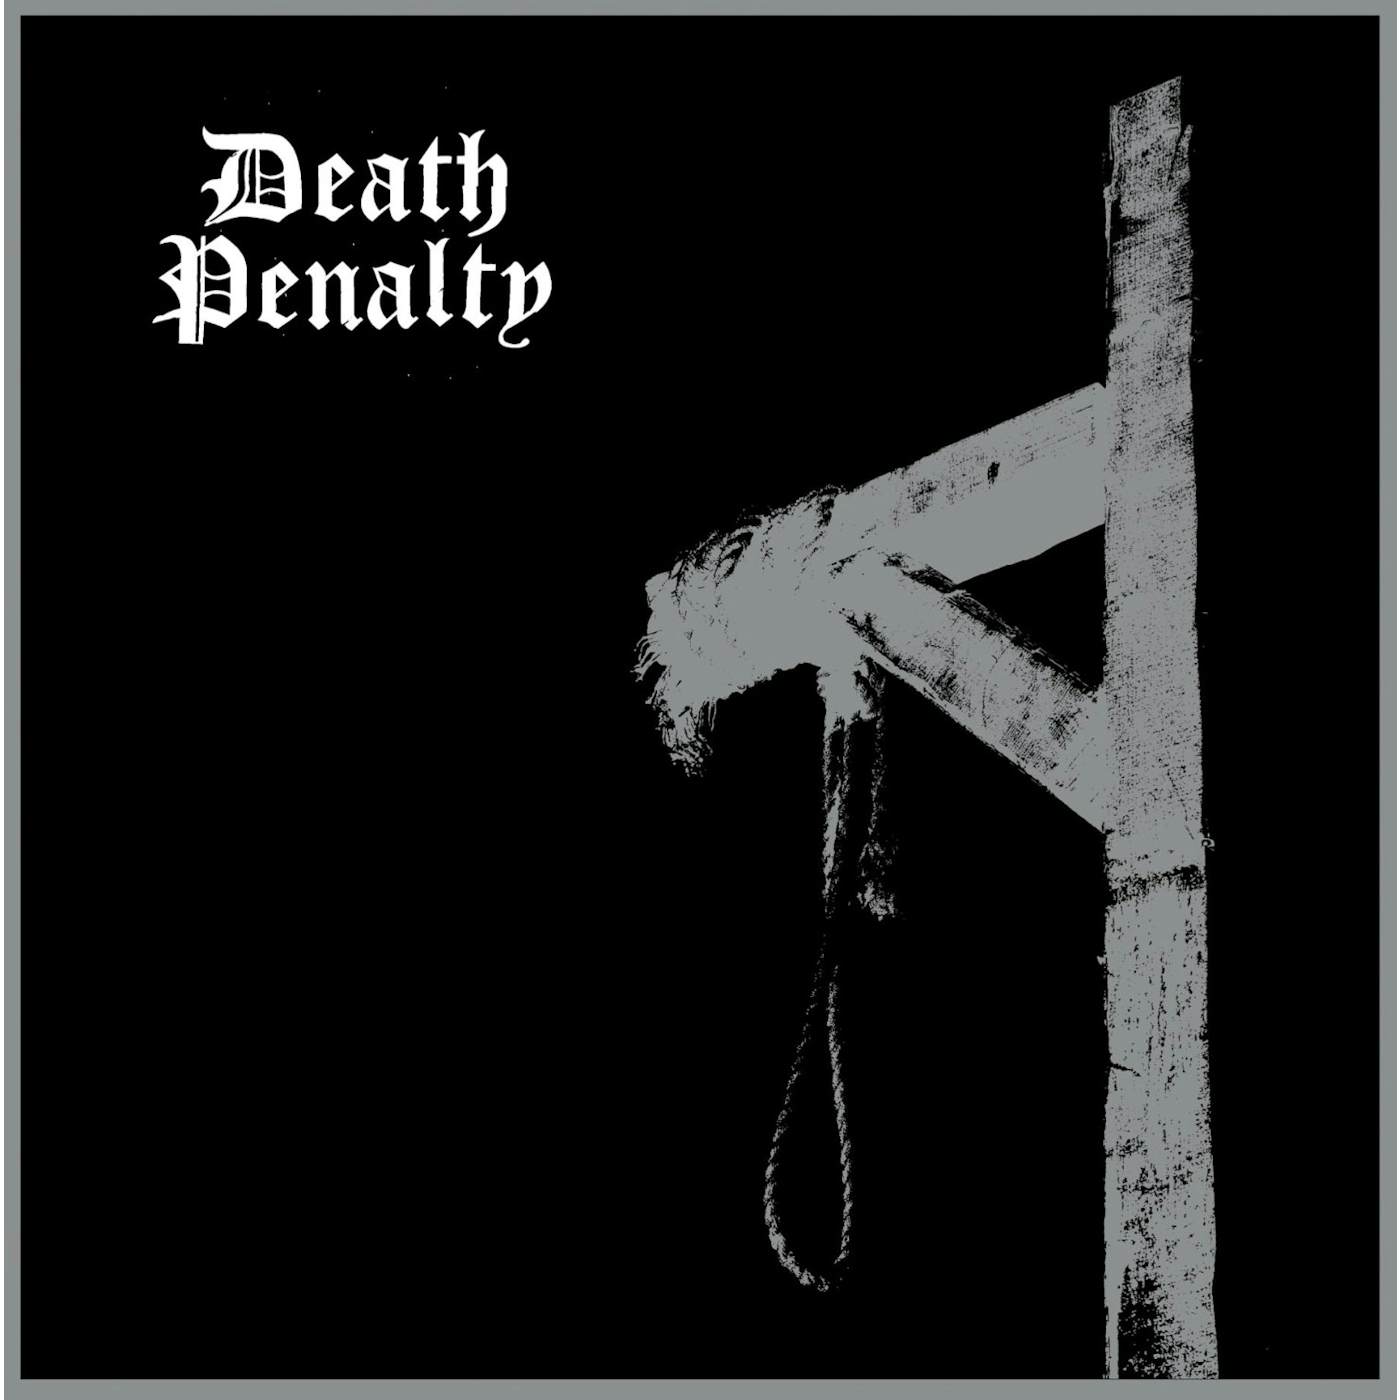 Death Penalty Vinyl Record